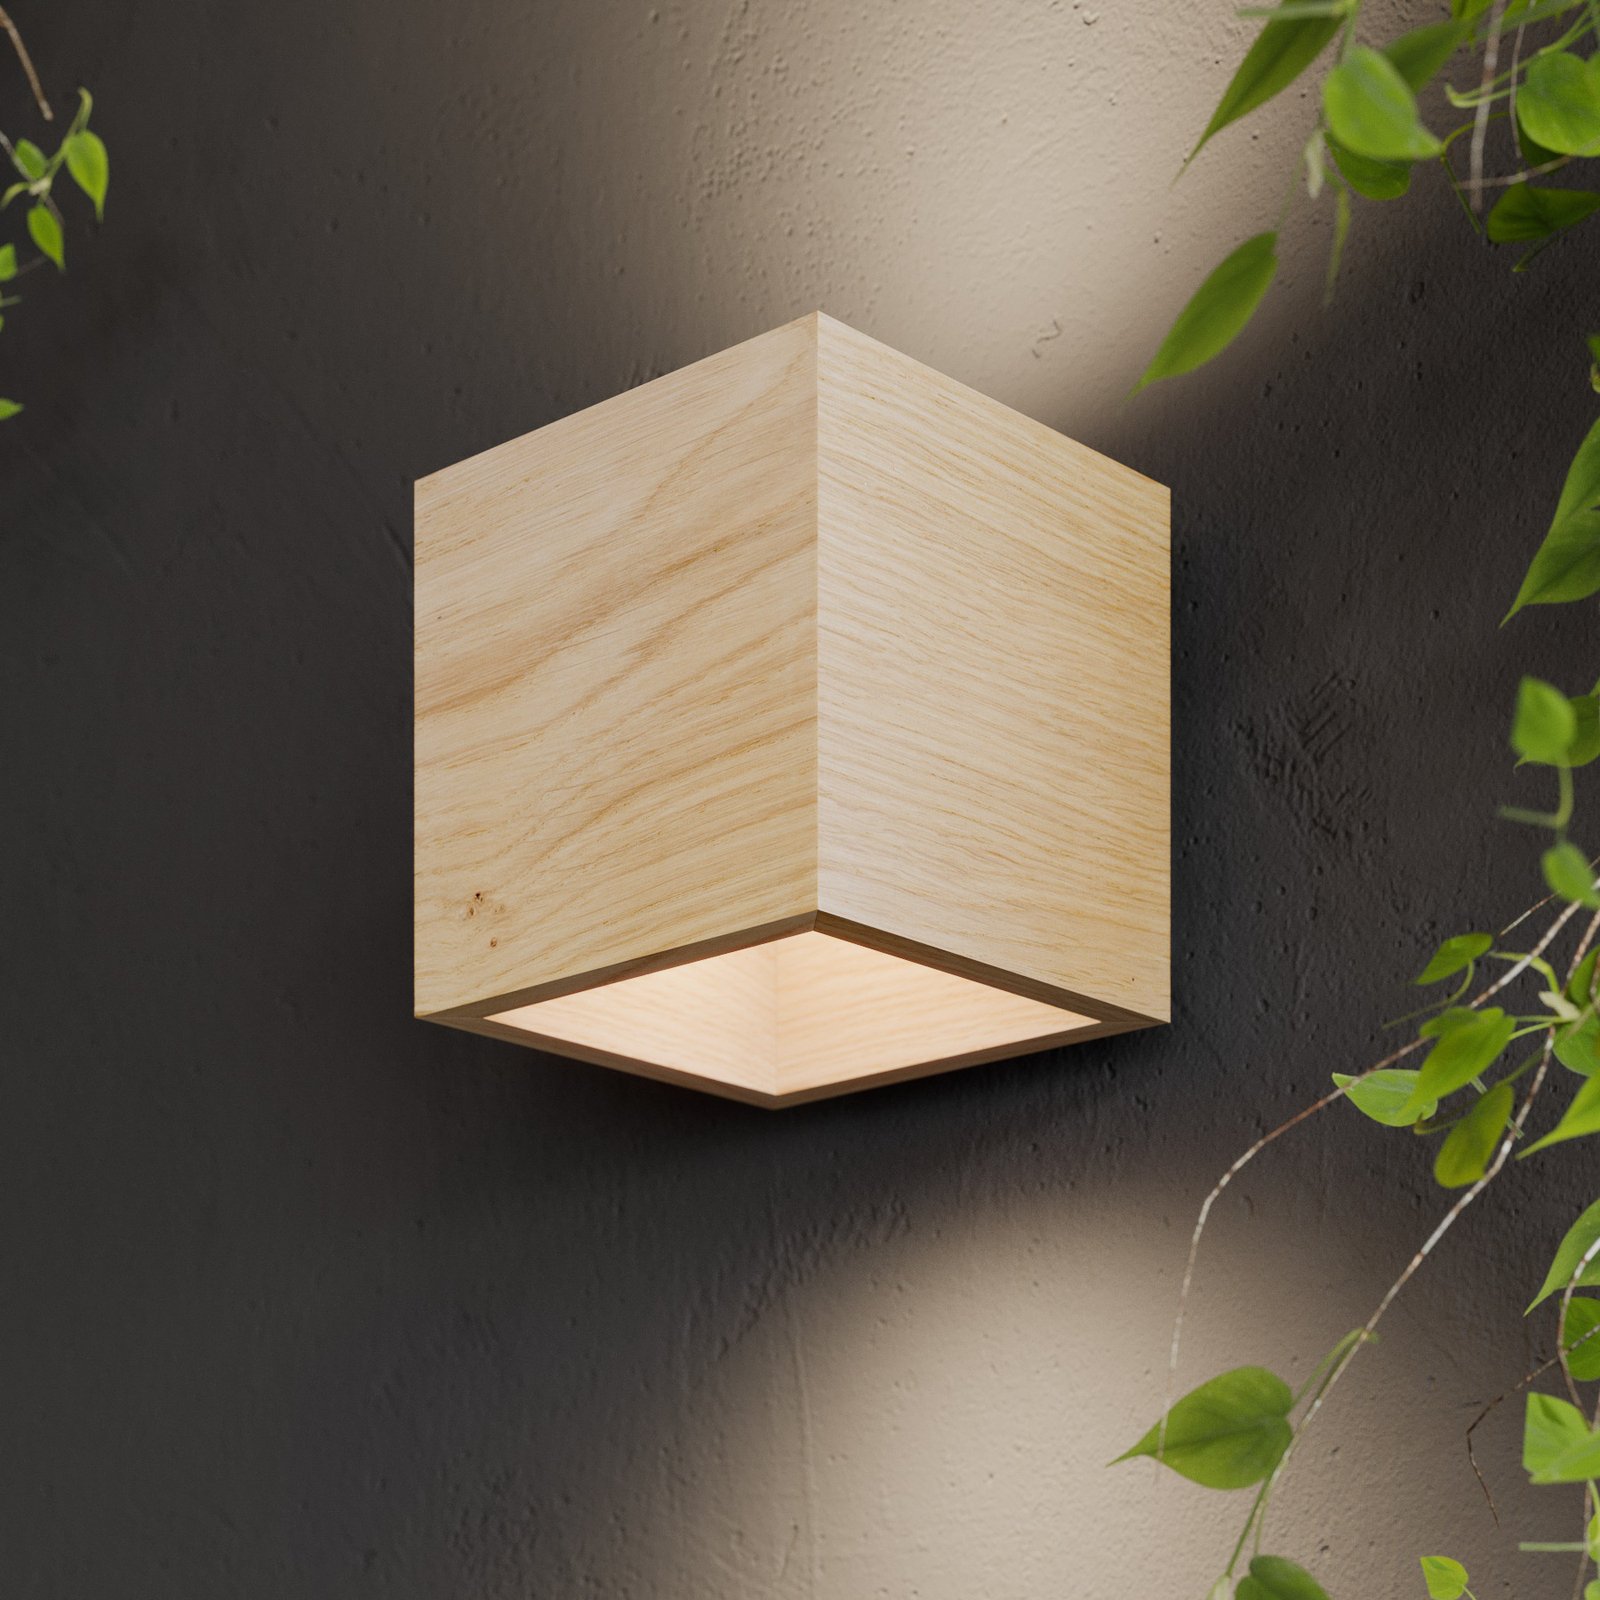 Envostar Urba wall light made of oak wood